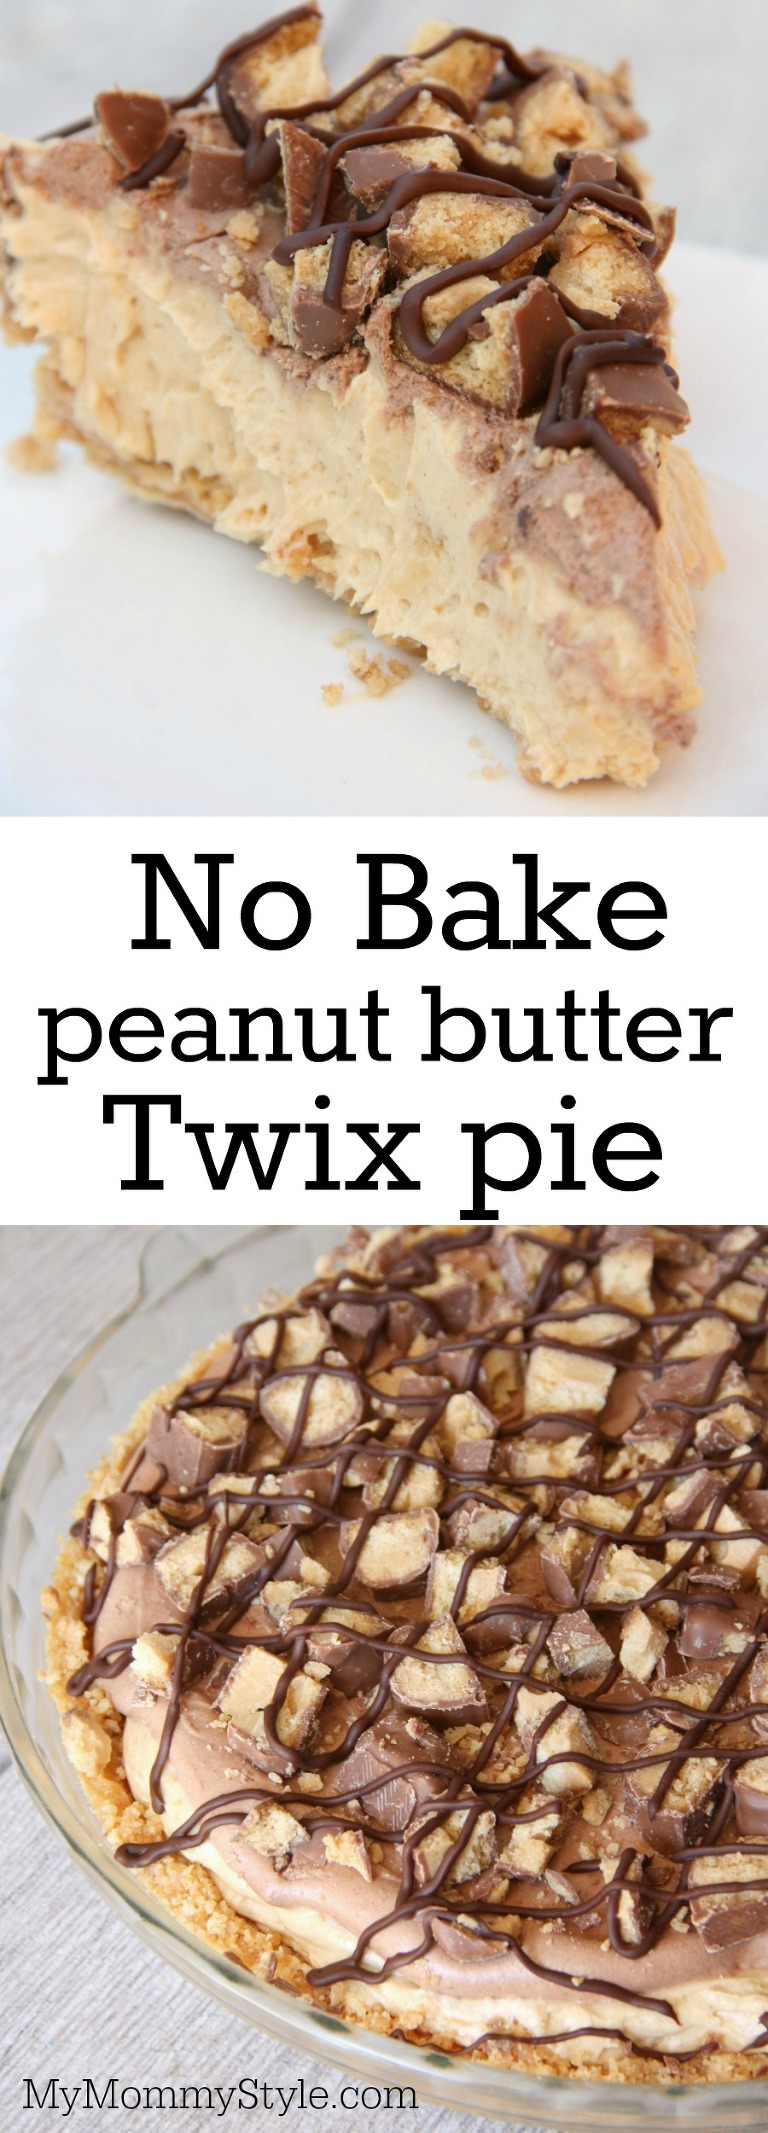 no bake peanut butter twix pie